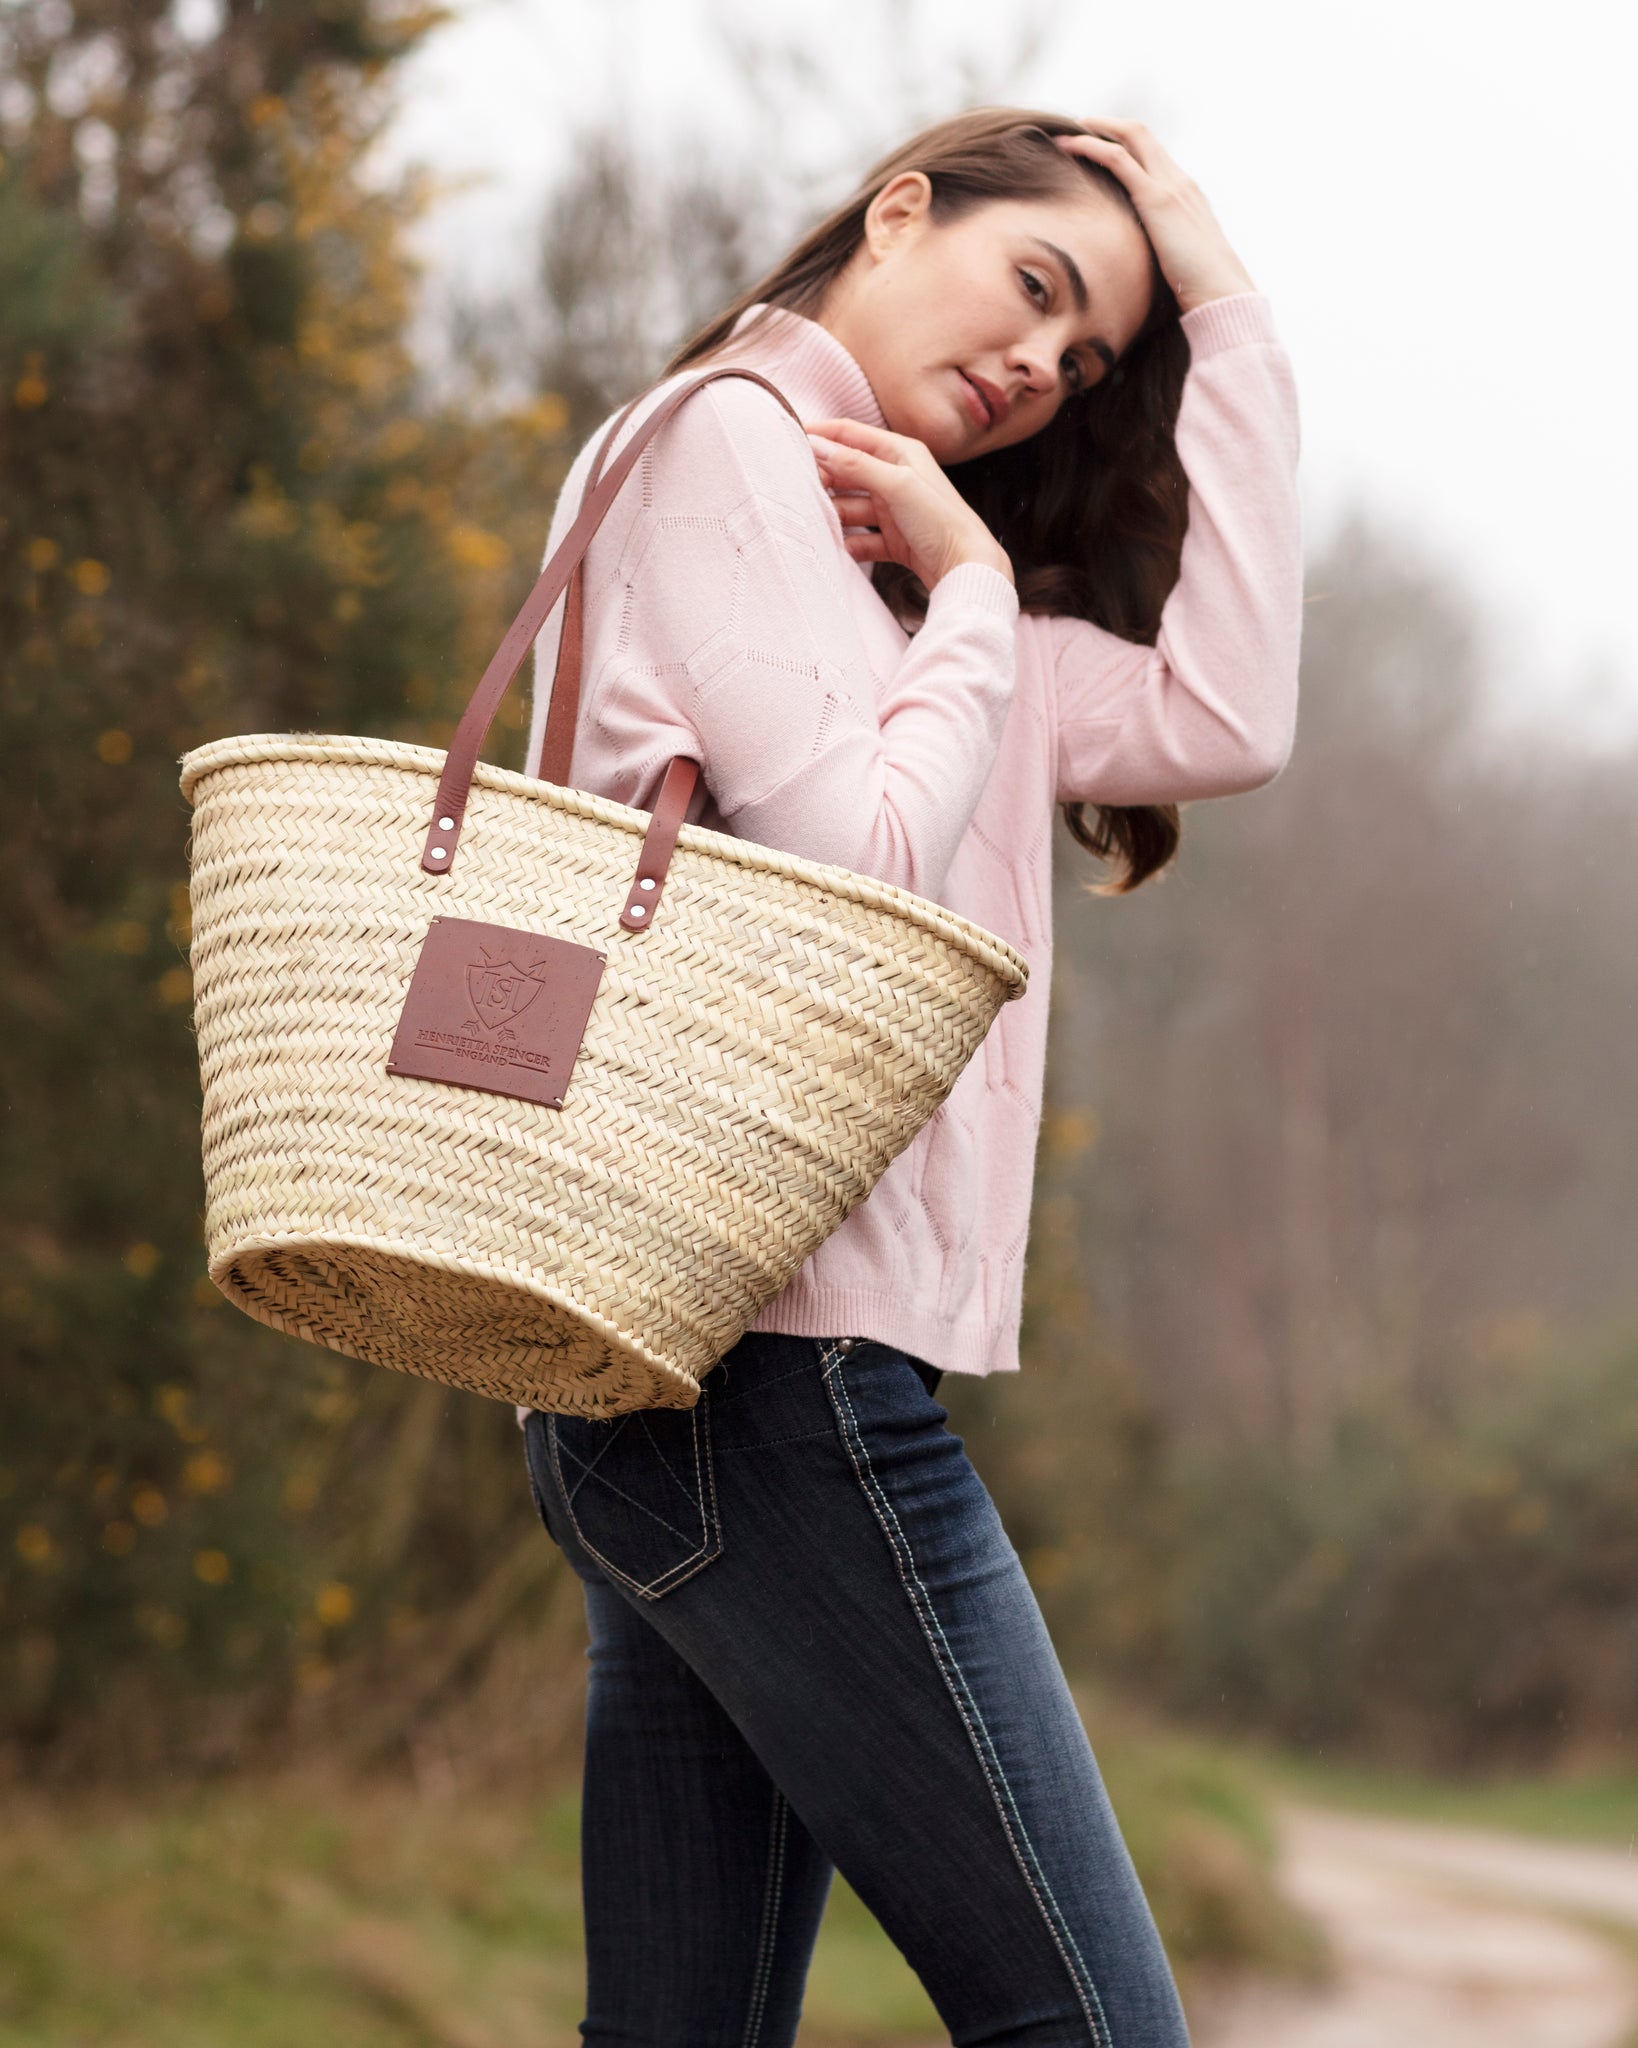 Buy HOKIPO Handmade Natural Grass Basket bag Eco-Friendly Tote Bag |  Shoulder Handbag for Women & Girls (AR-4406) at Amazon.in